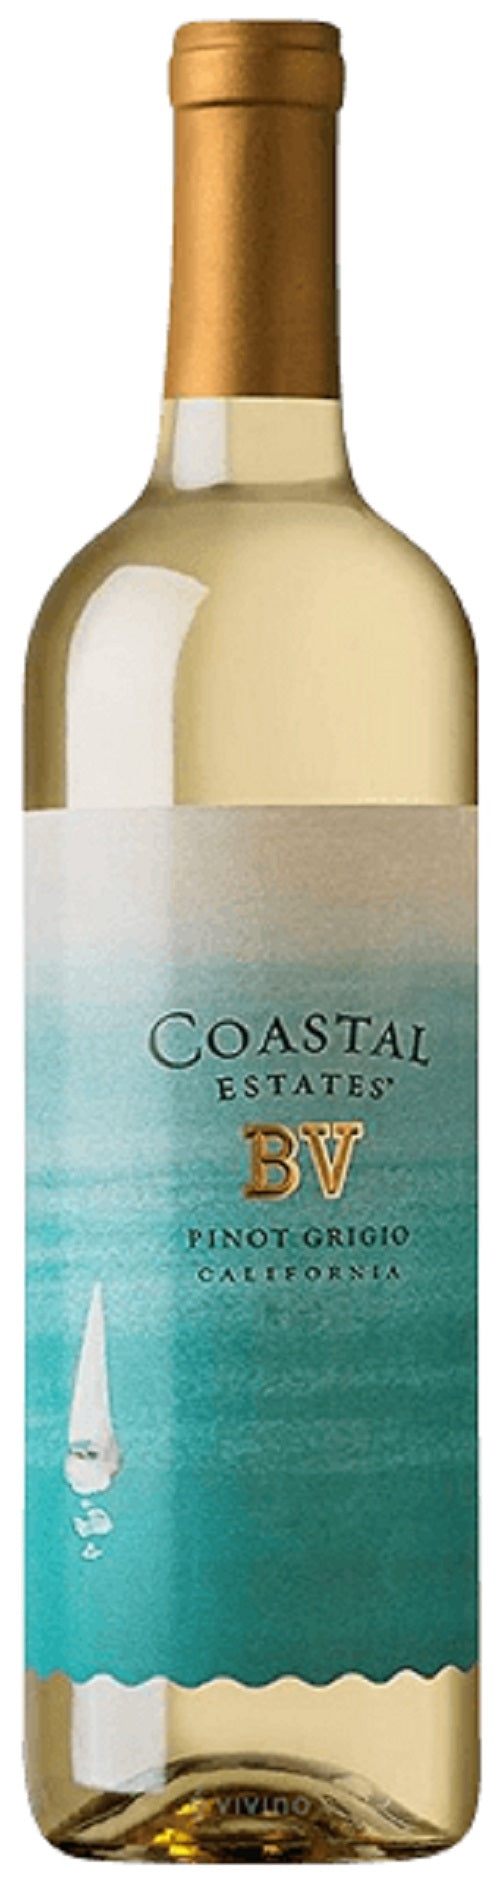 Bv Coastal Estates Pinot Grigio